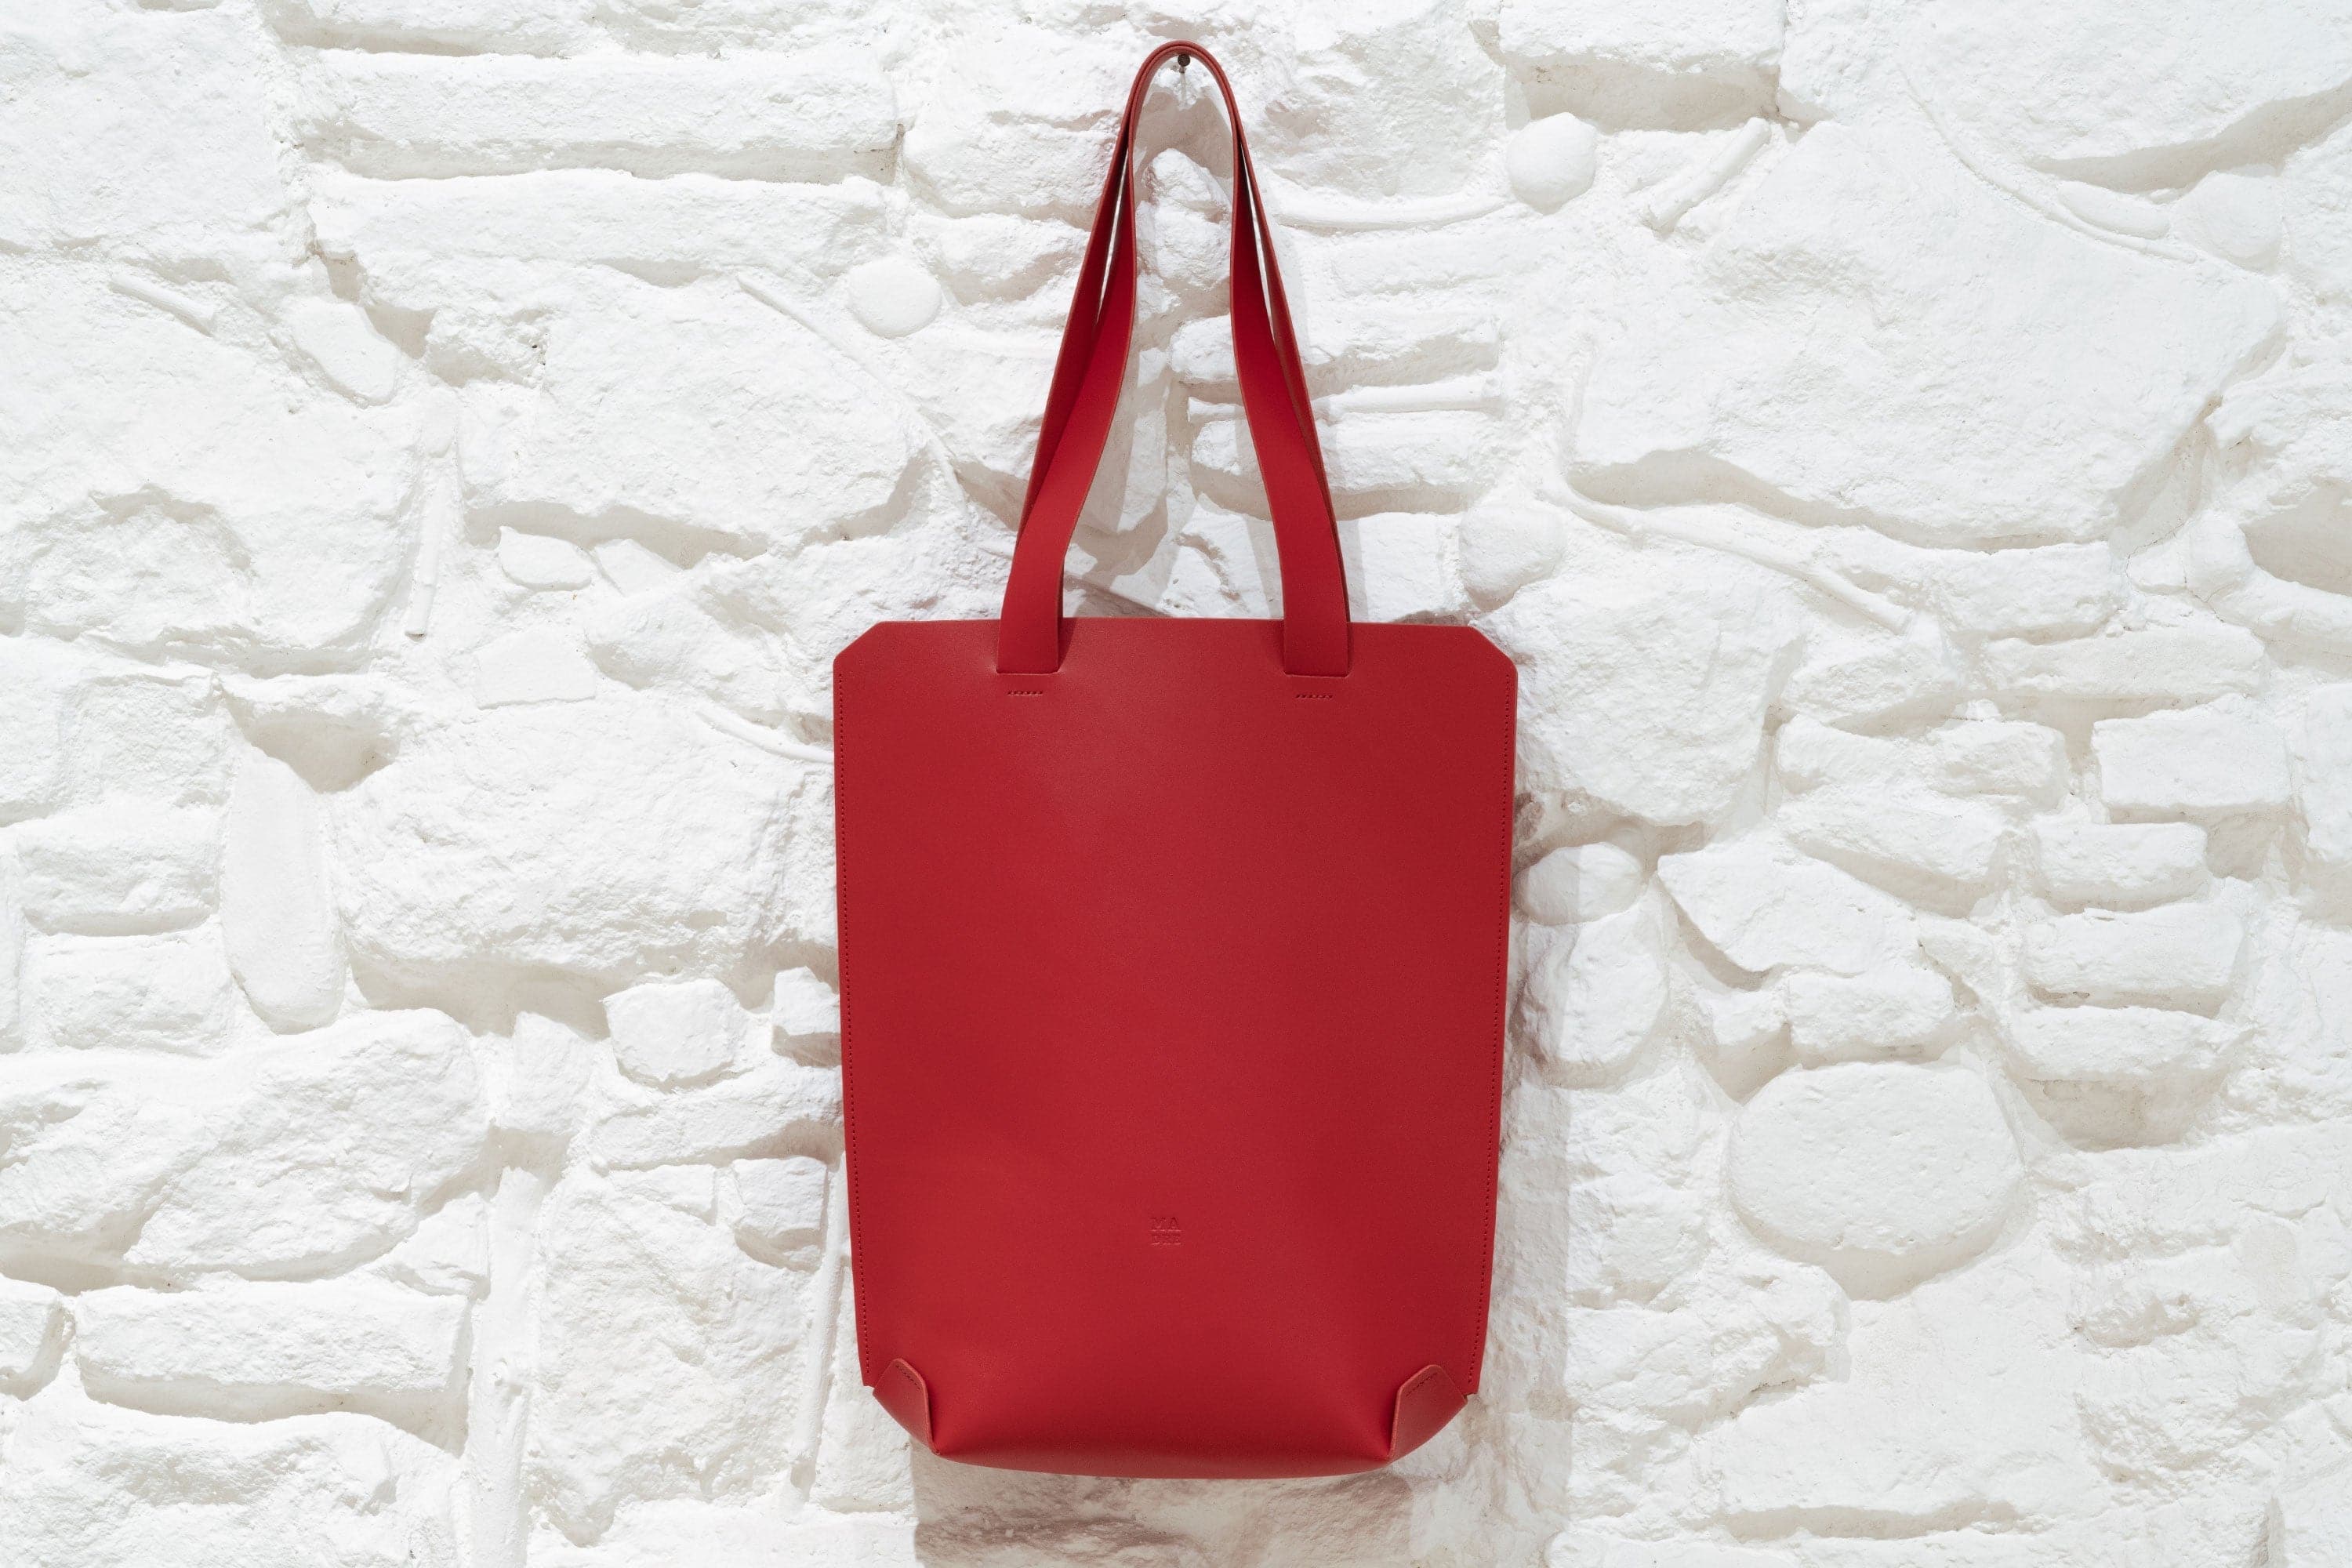 Large Tote Handbag Red Leather Vachetta Minimalistic Design Hanging on Wall Design By Manuel Dreesmann Atelier Madre Barcelona Spain